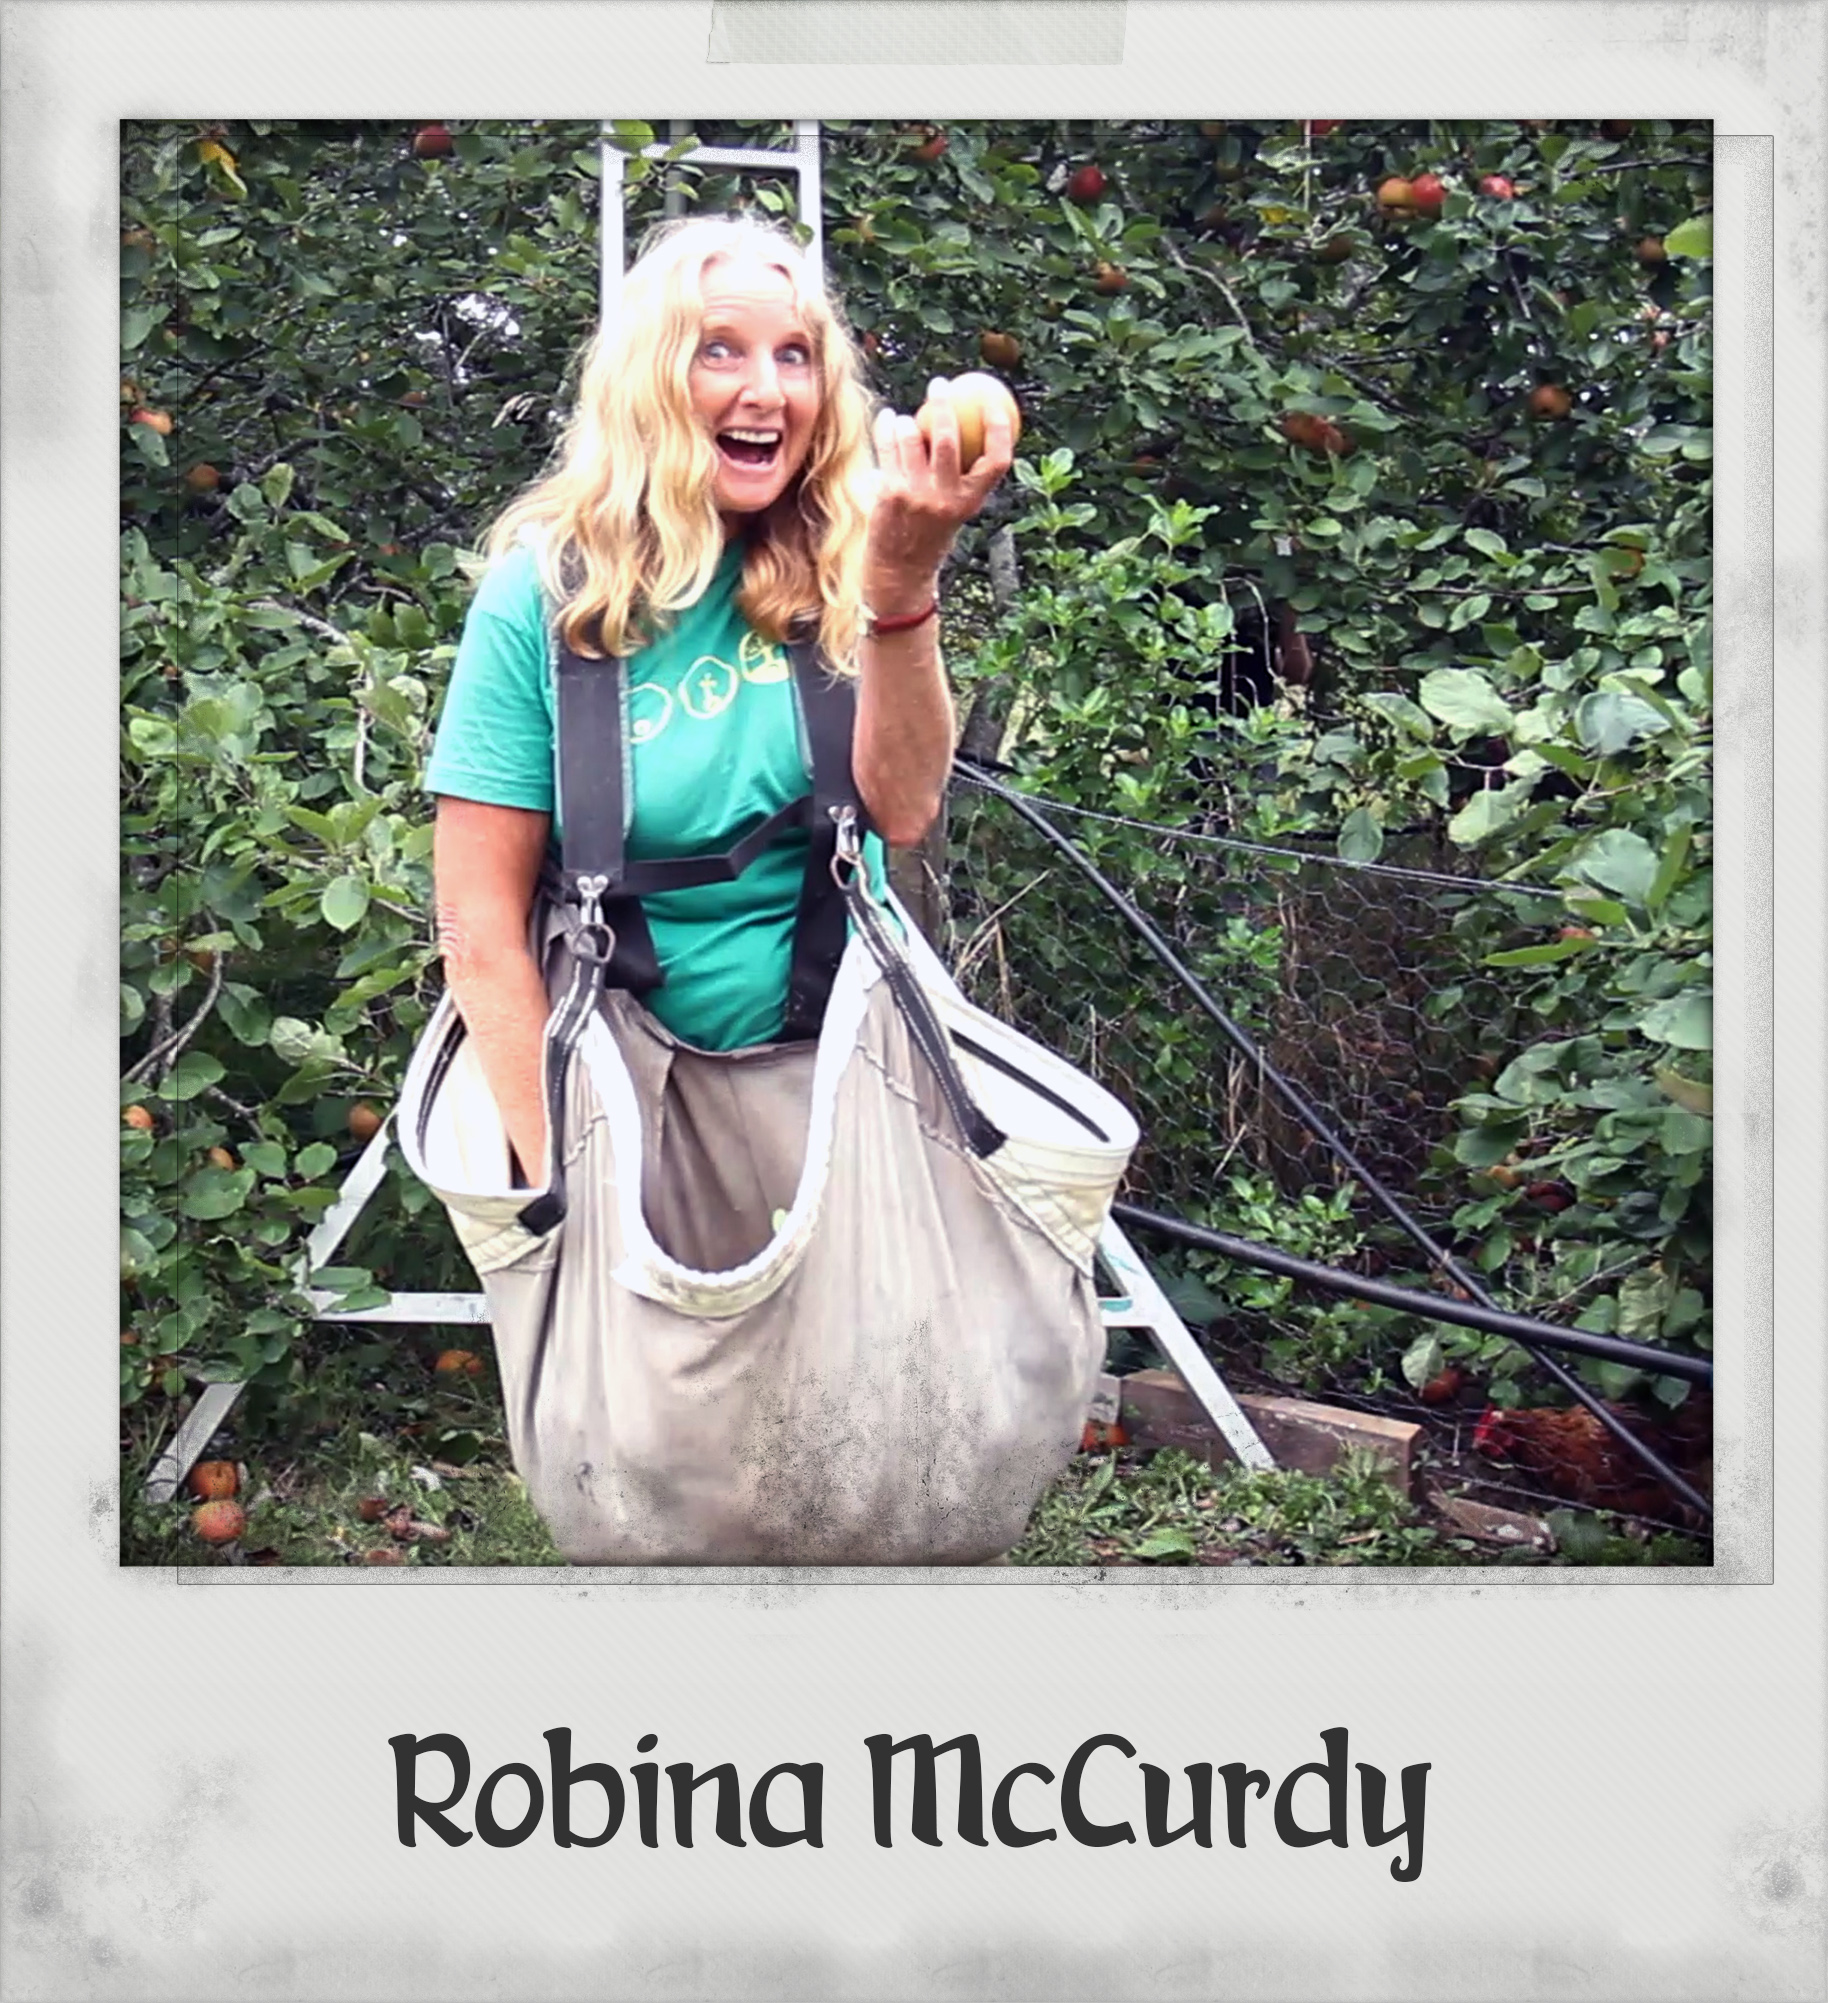 Robina McCurdy